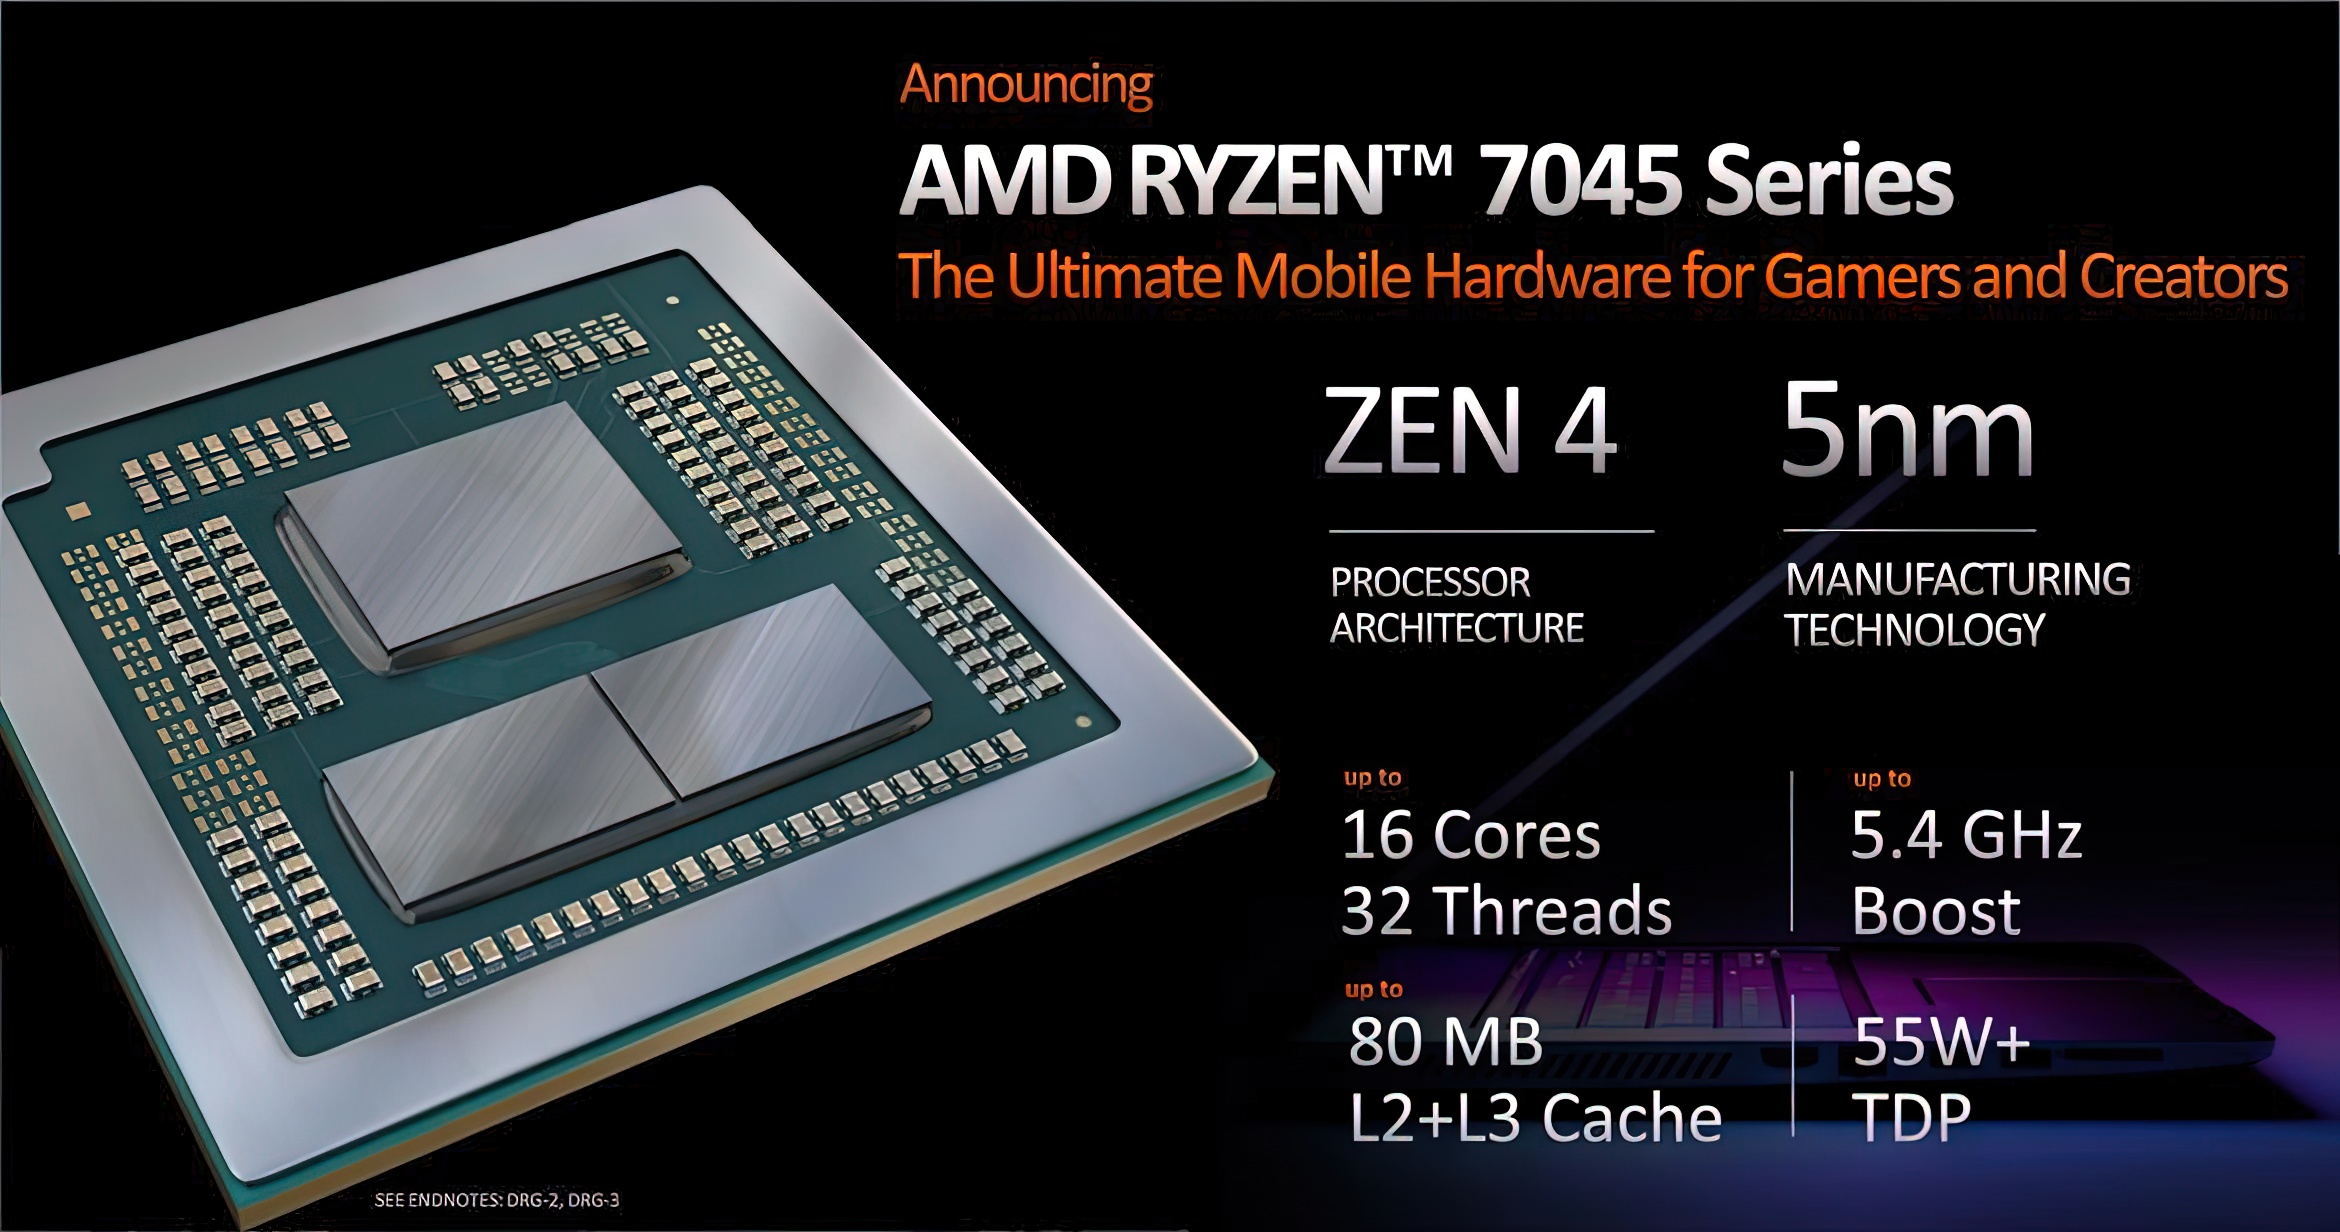 amd ryzen 7000 mobile ces 2023 3 เอเอ็มดีเปิดตัวซีพียู AMD Ryzen 7000 mobile series สถาปัตย์ Zen4 ขนาด 5nm ใหม่ล่าสุดถึง 5รุ่น รุ่นท็อป Ryzen 9 7945HX 16C/32T ความเร็ว 5.4Ghz 